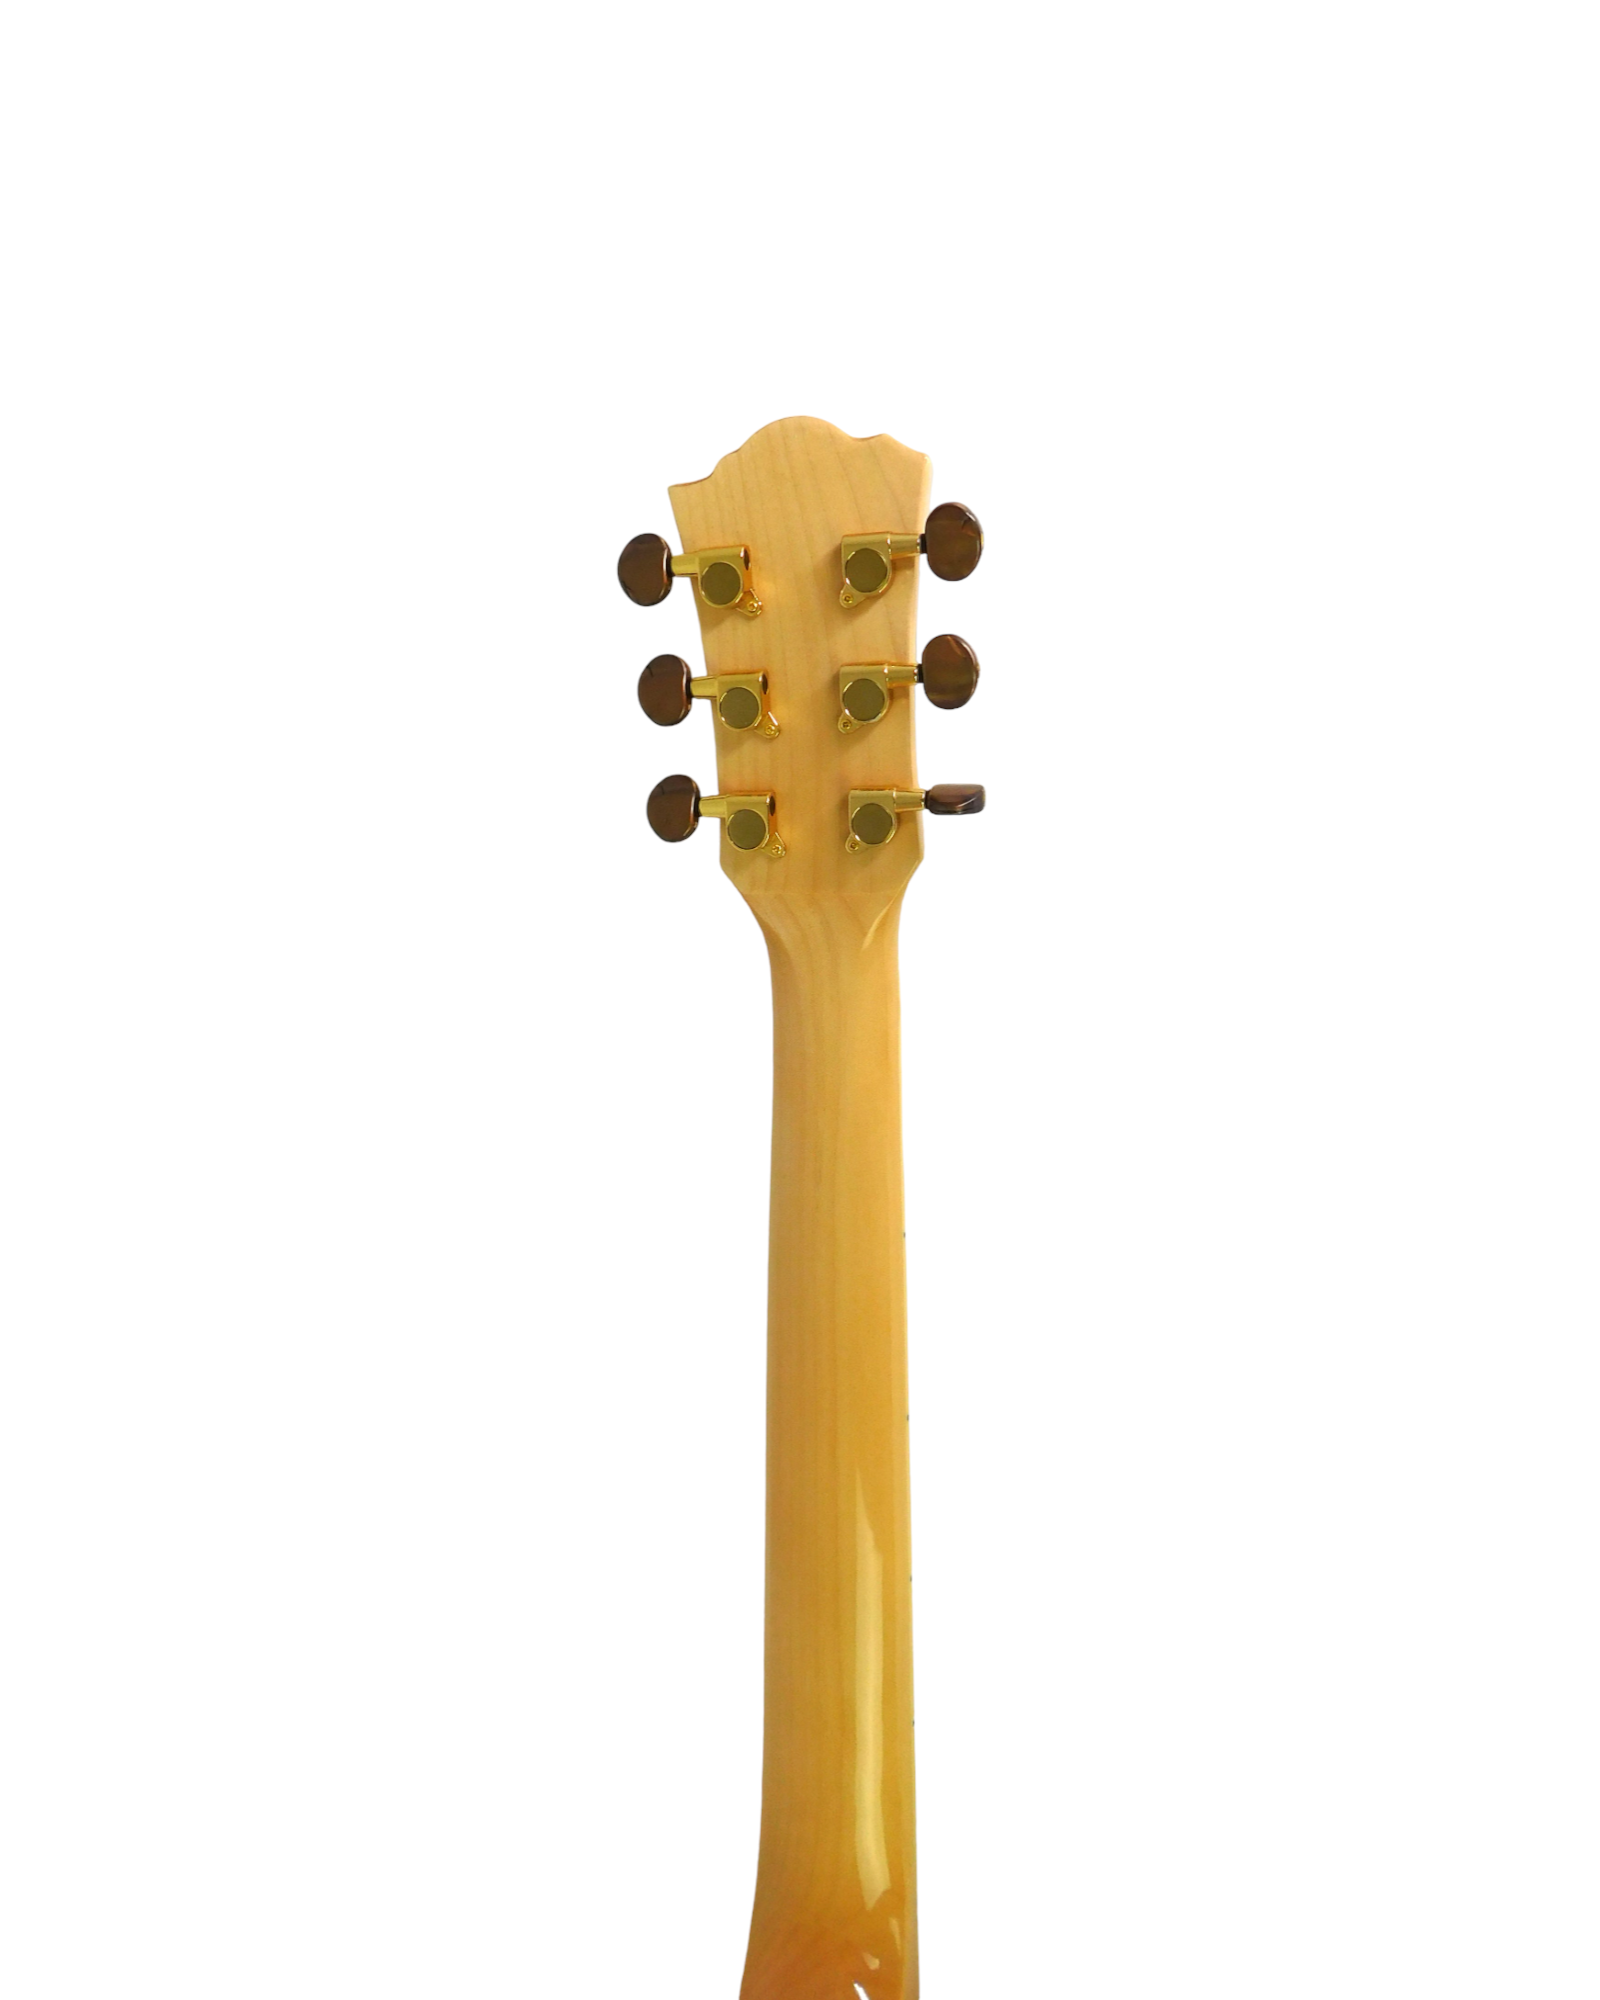 Caraya SDG837CEQSPN All Flame Maple Acoustic Guitar, EQ/REVERB